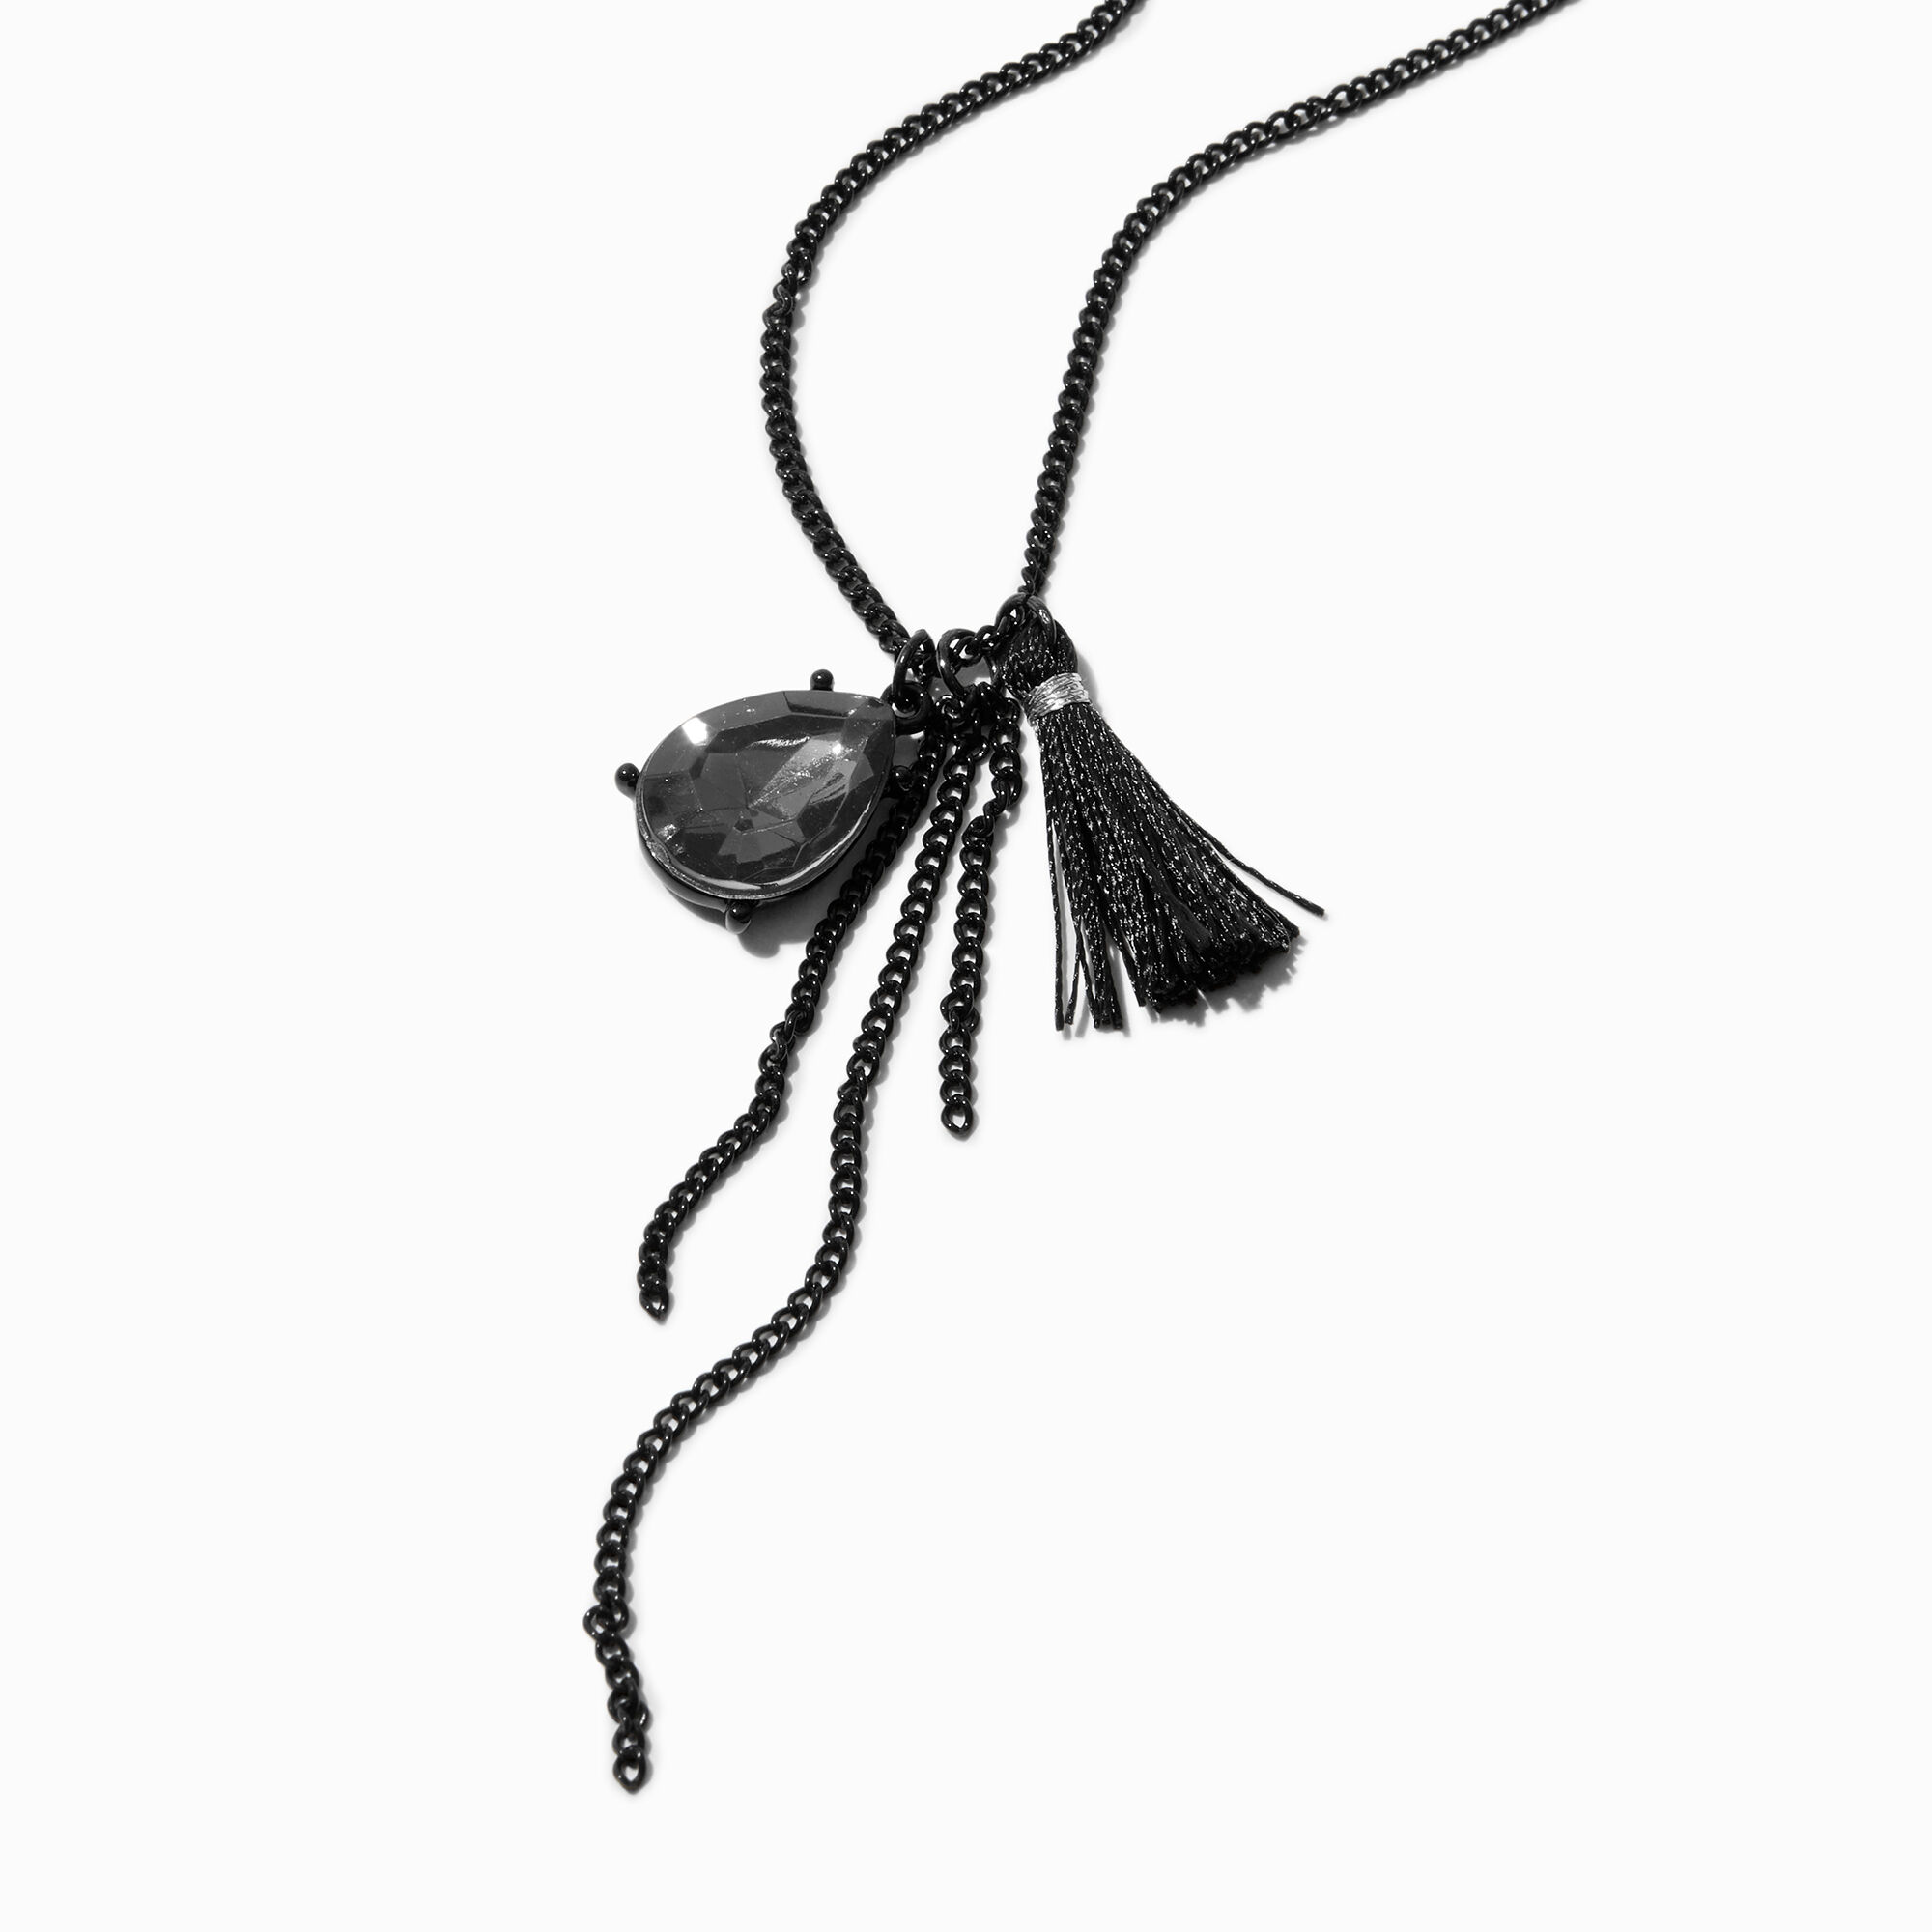 View Claires Rhinestone Tassel Pendant Necklace Black information